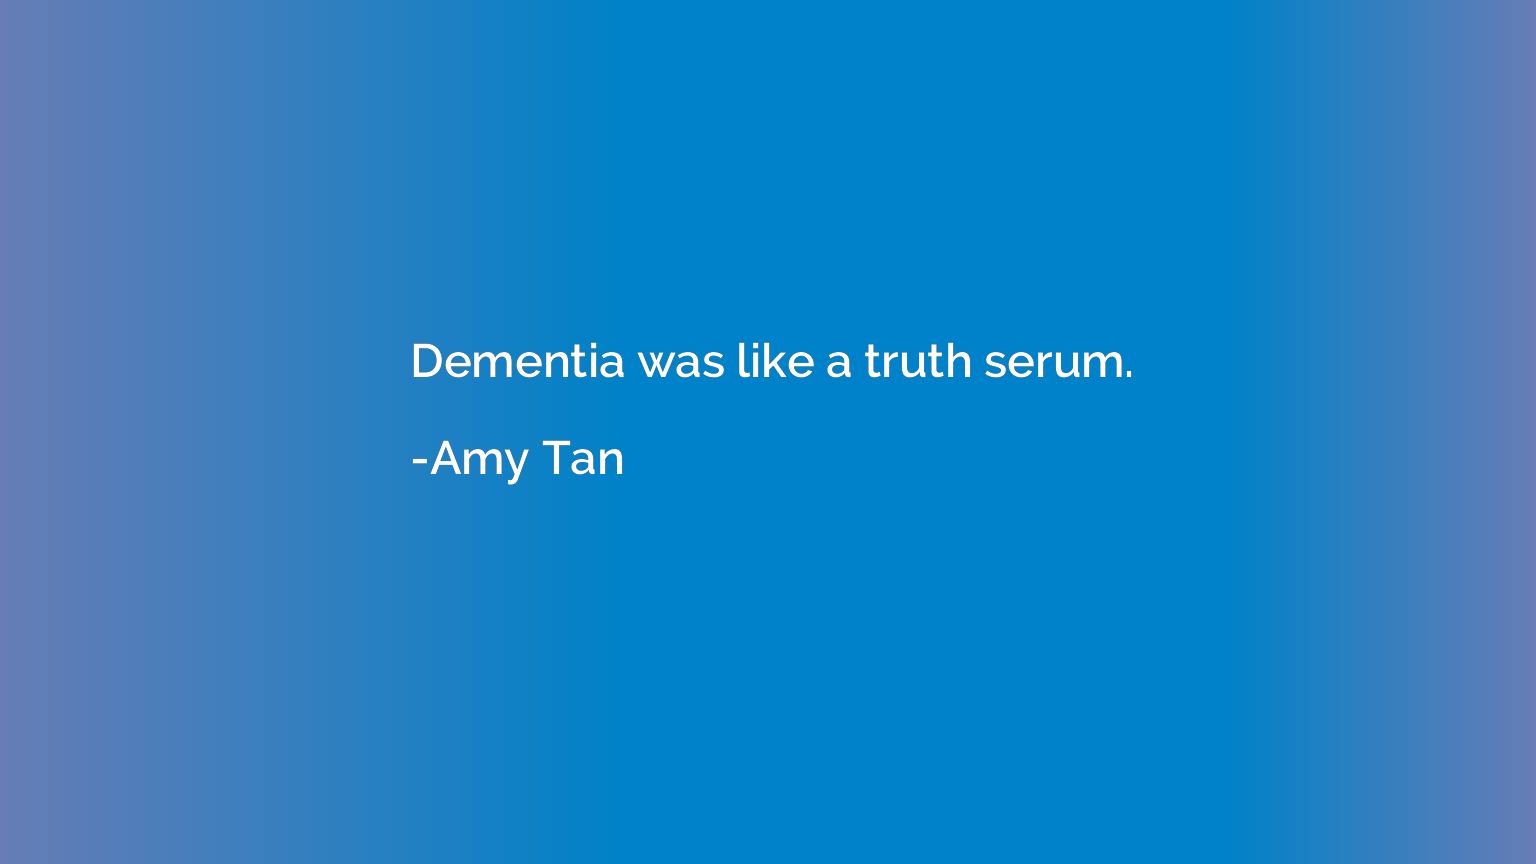 Dementia was like a truth serum.